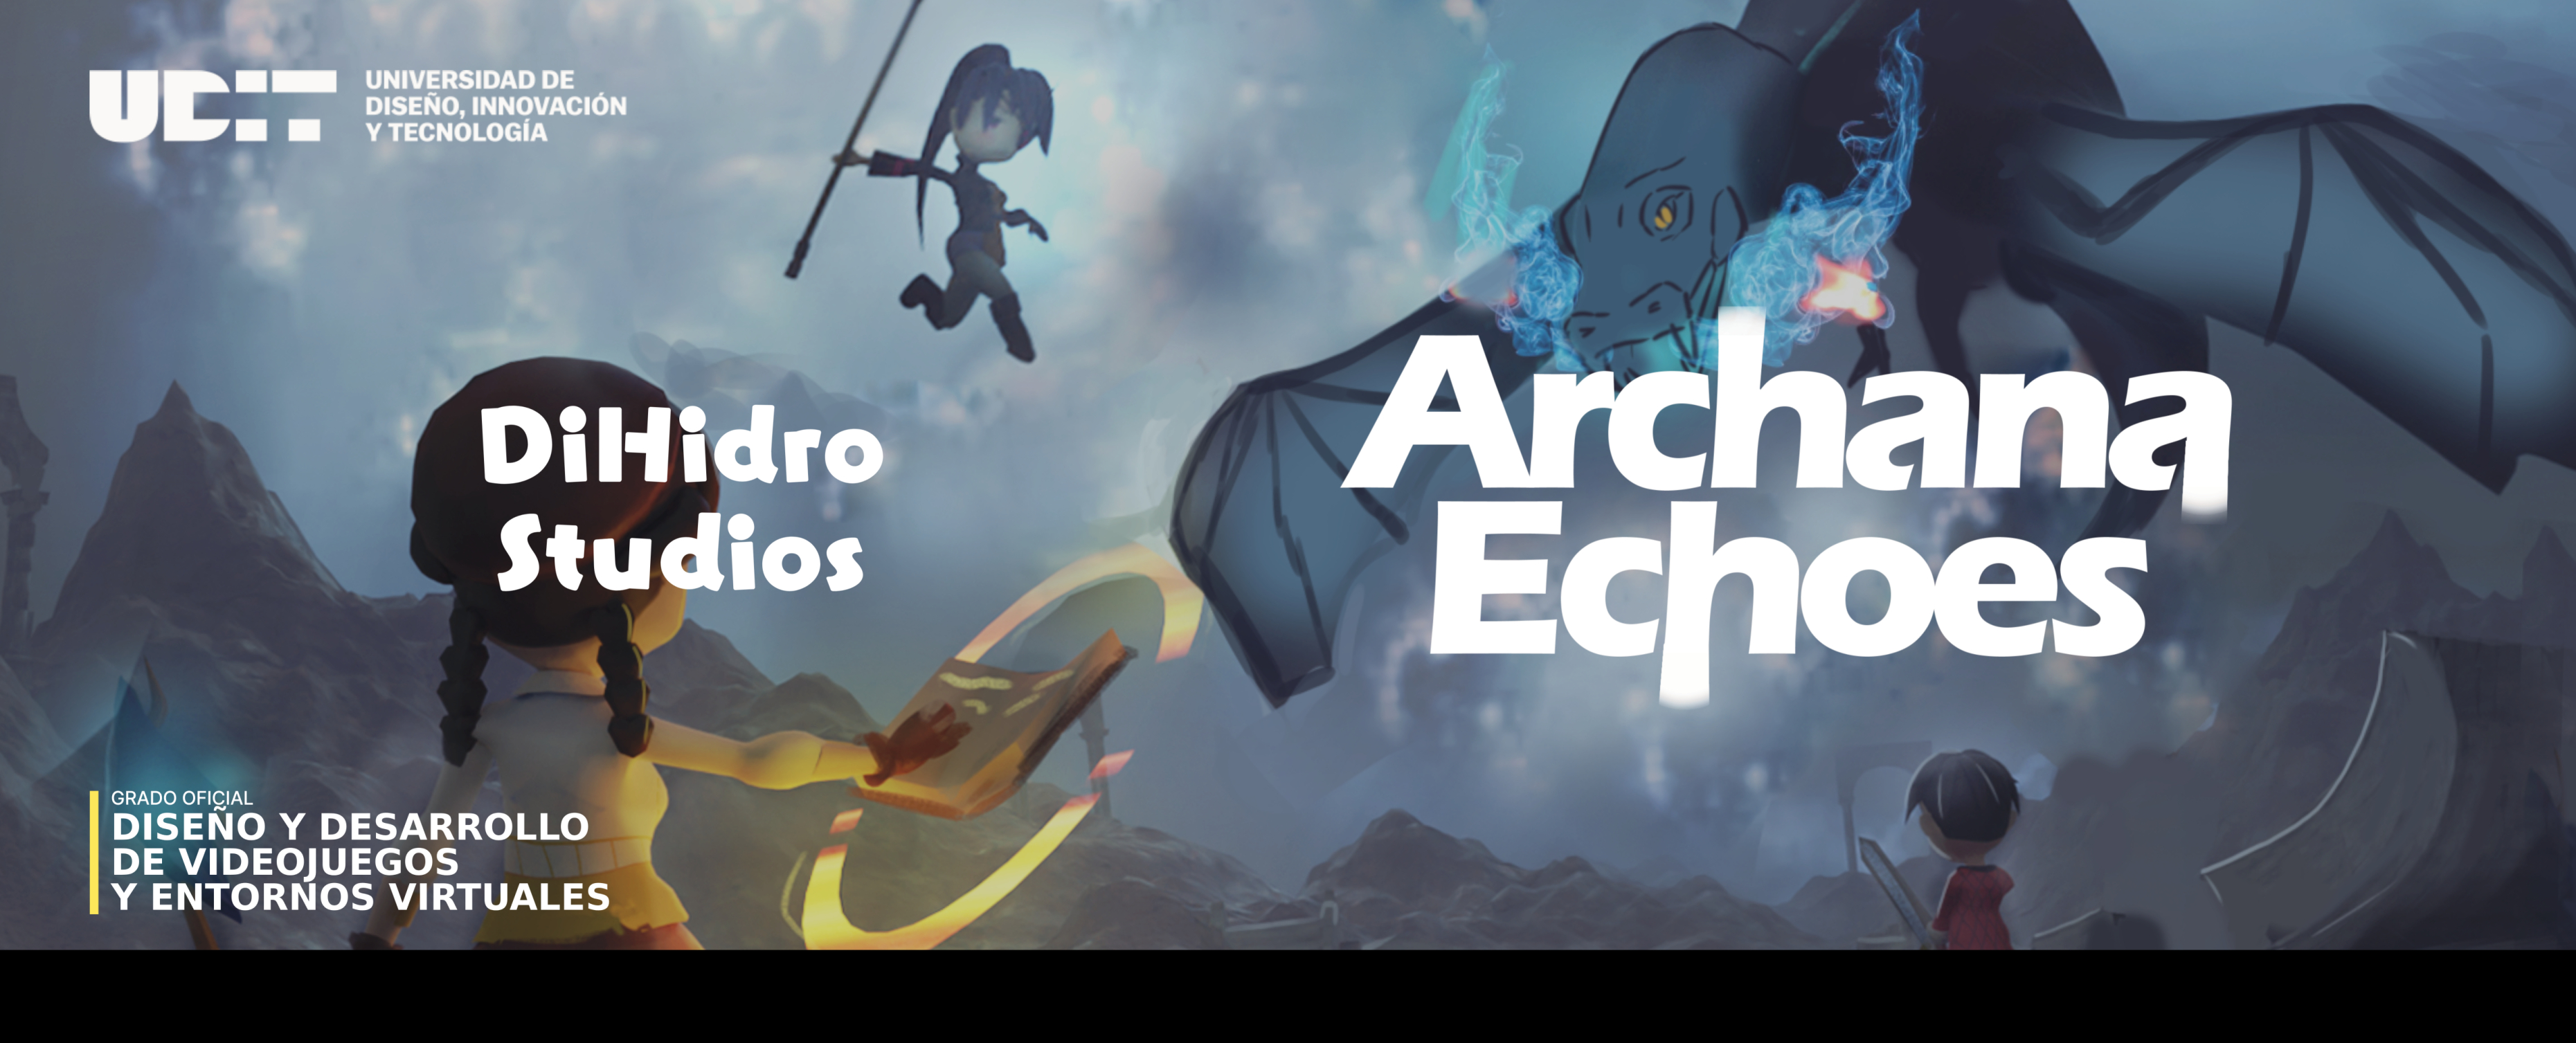 Archana Echoes